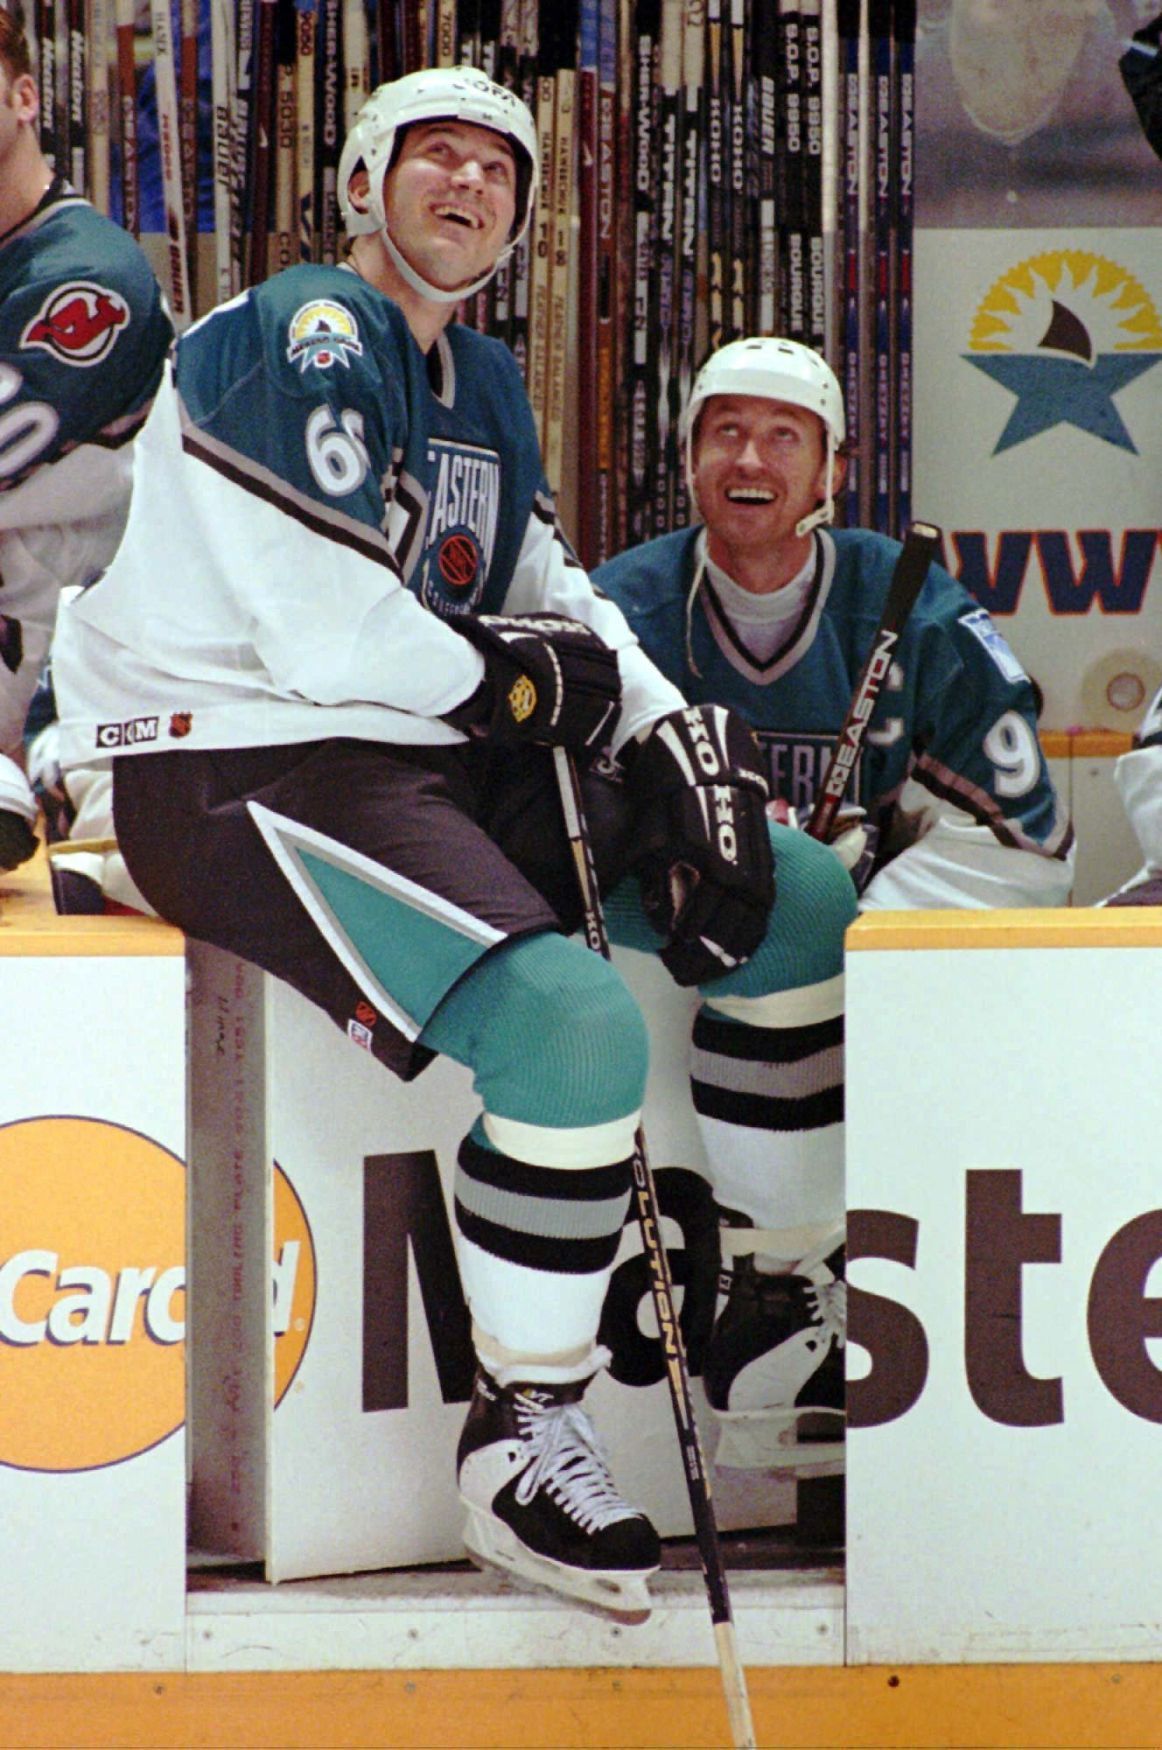 Mario Lemieux a Wayne Gretzky - All-Star Game 1997